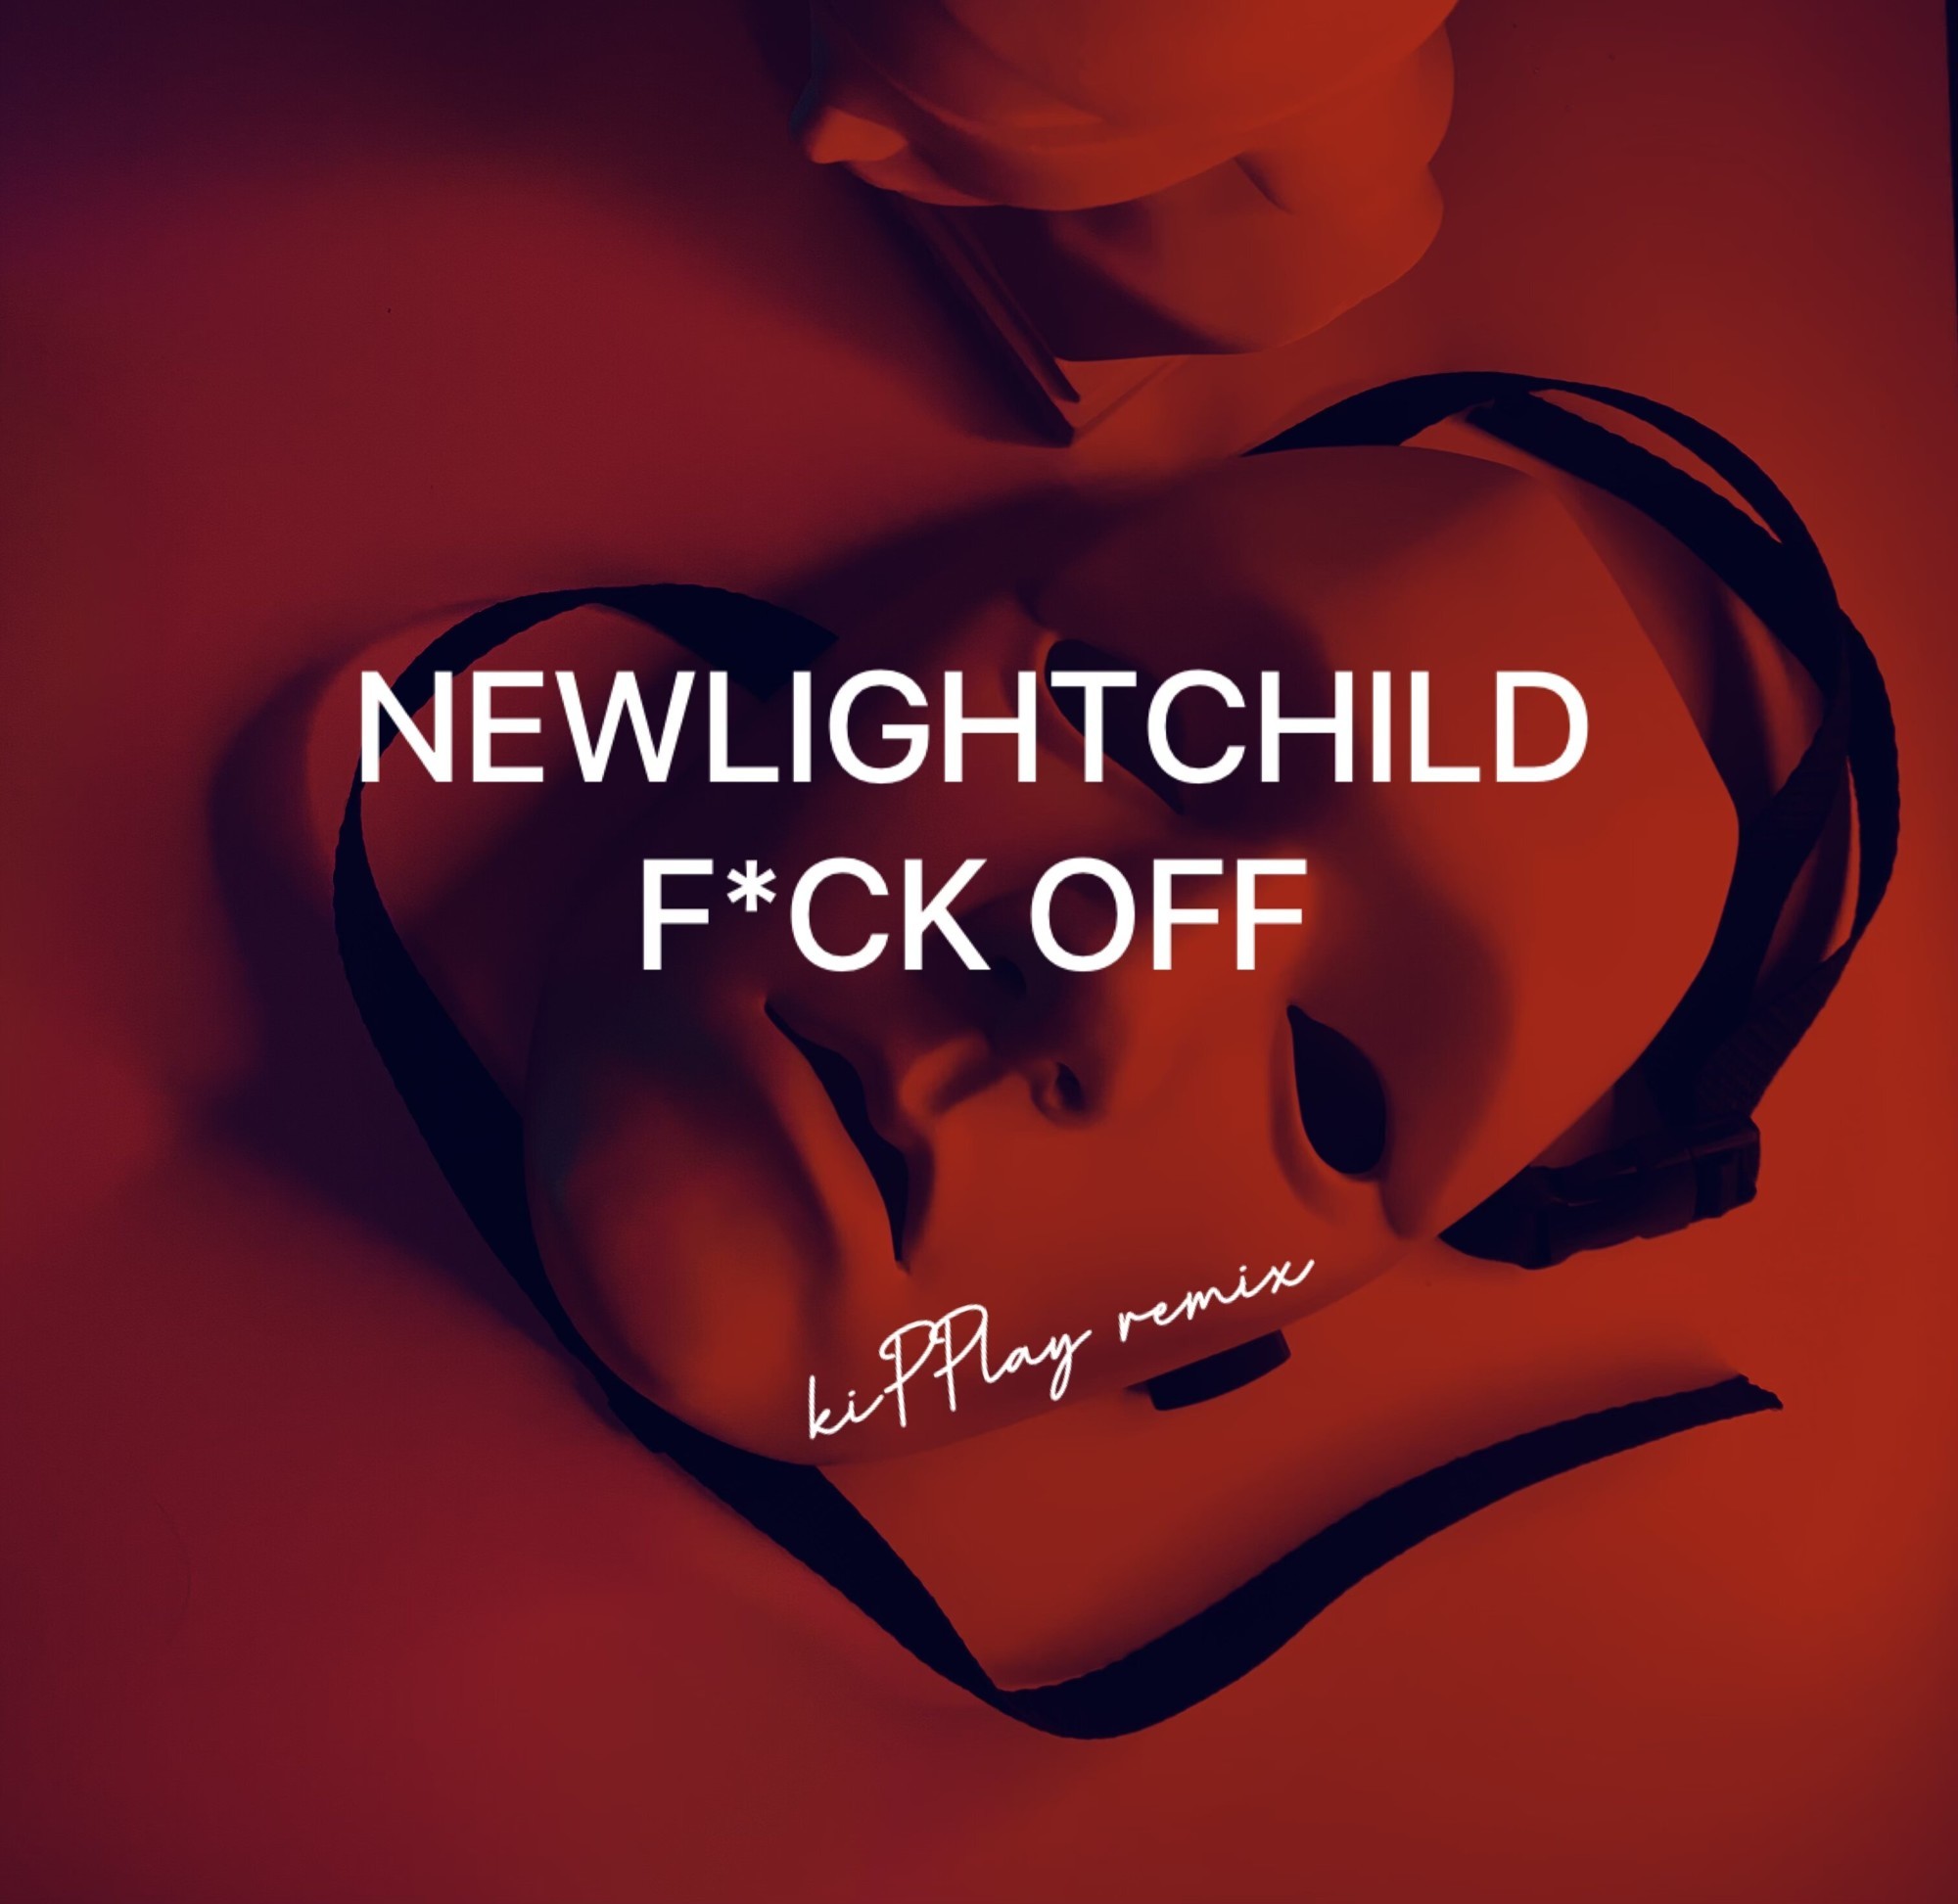 Fck off newlightchild. Newlightchild лицо. F*CK off newlightchild. Newlightchild имя. Newlightchild Омск.